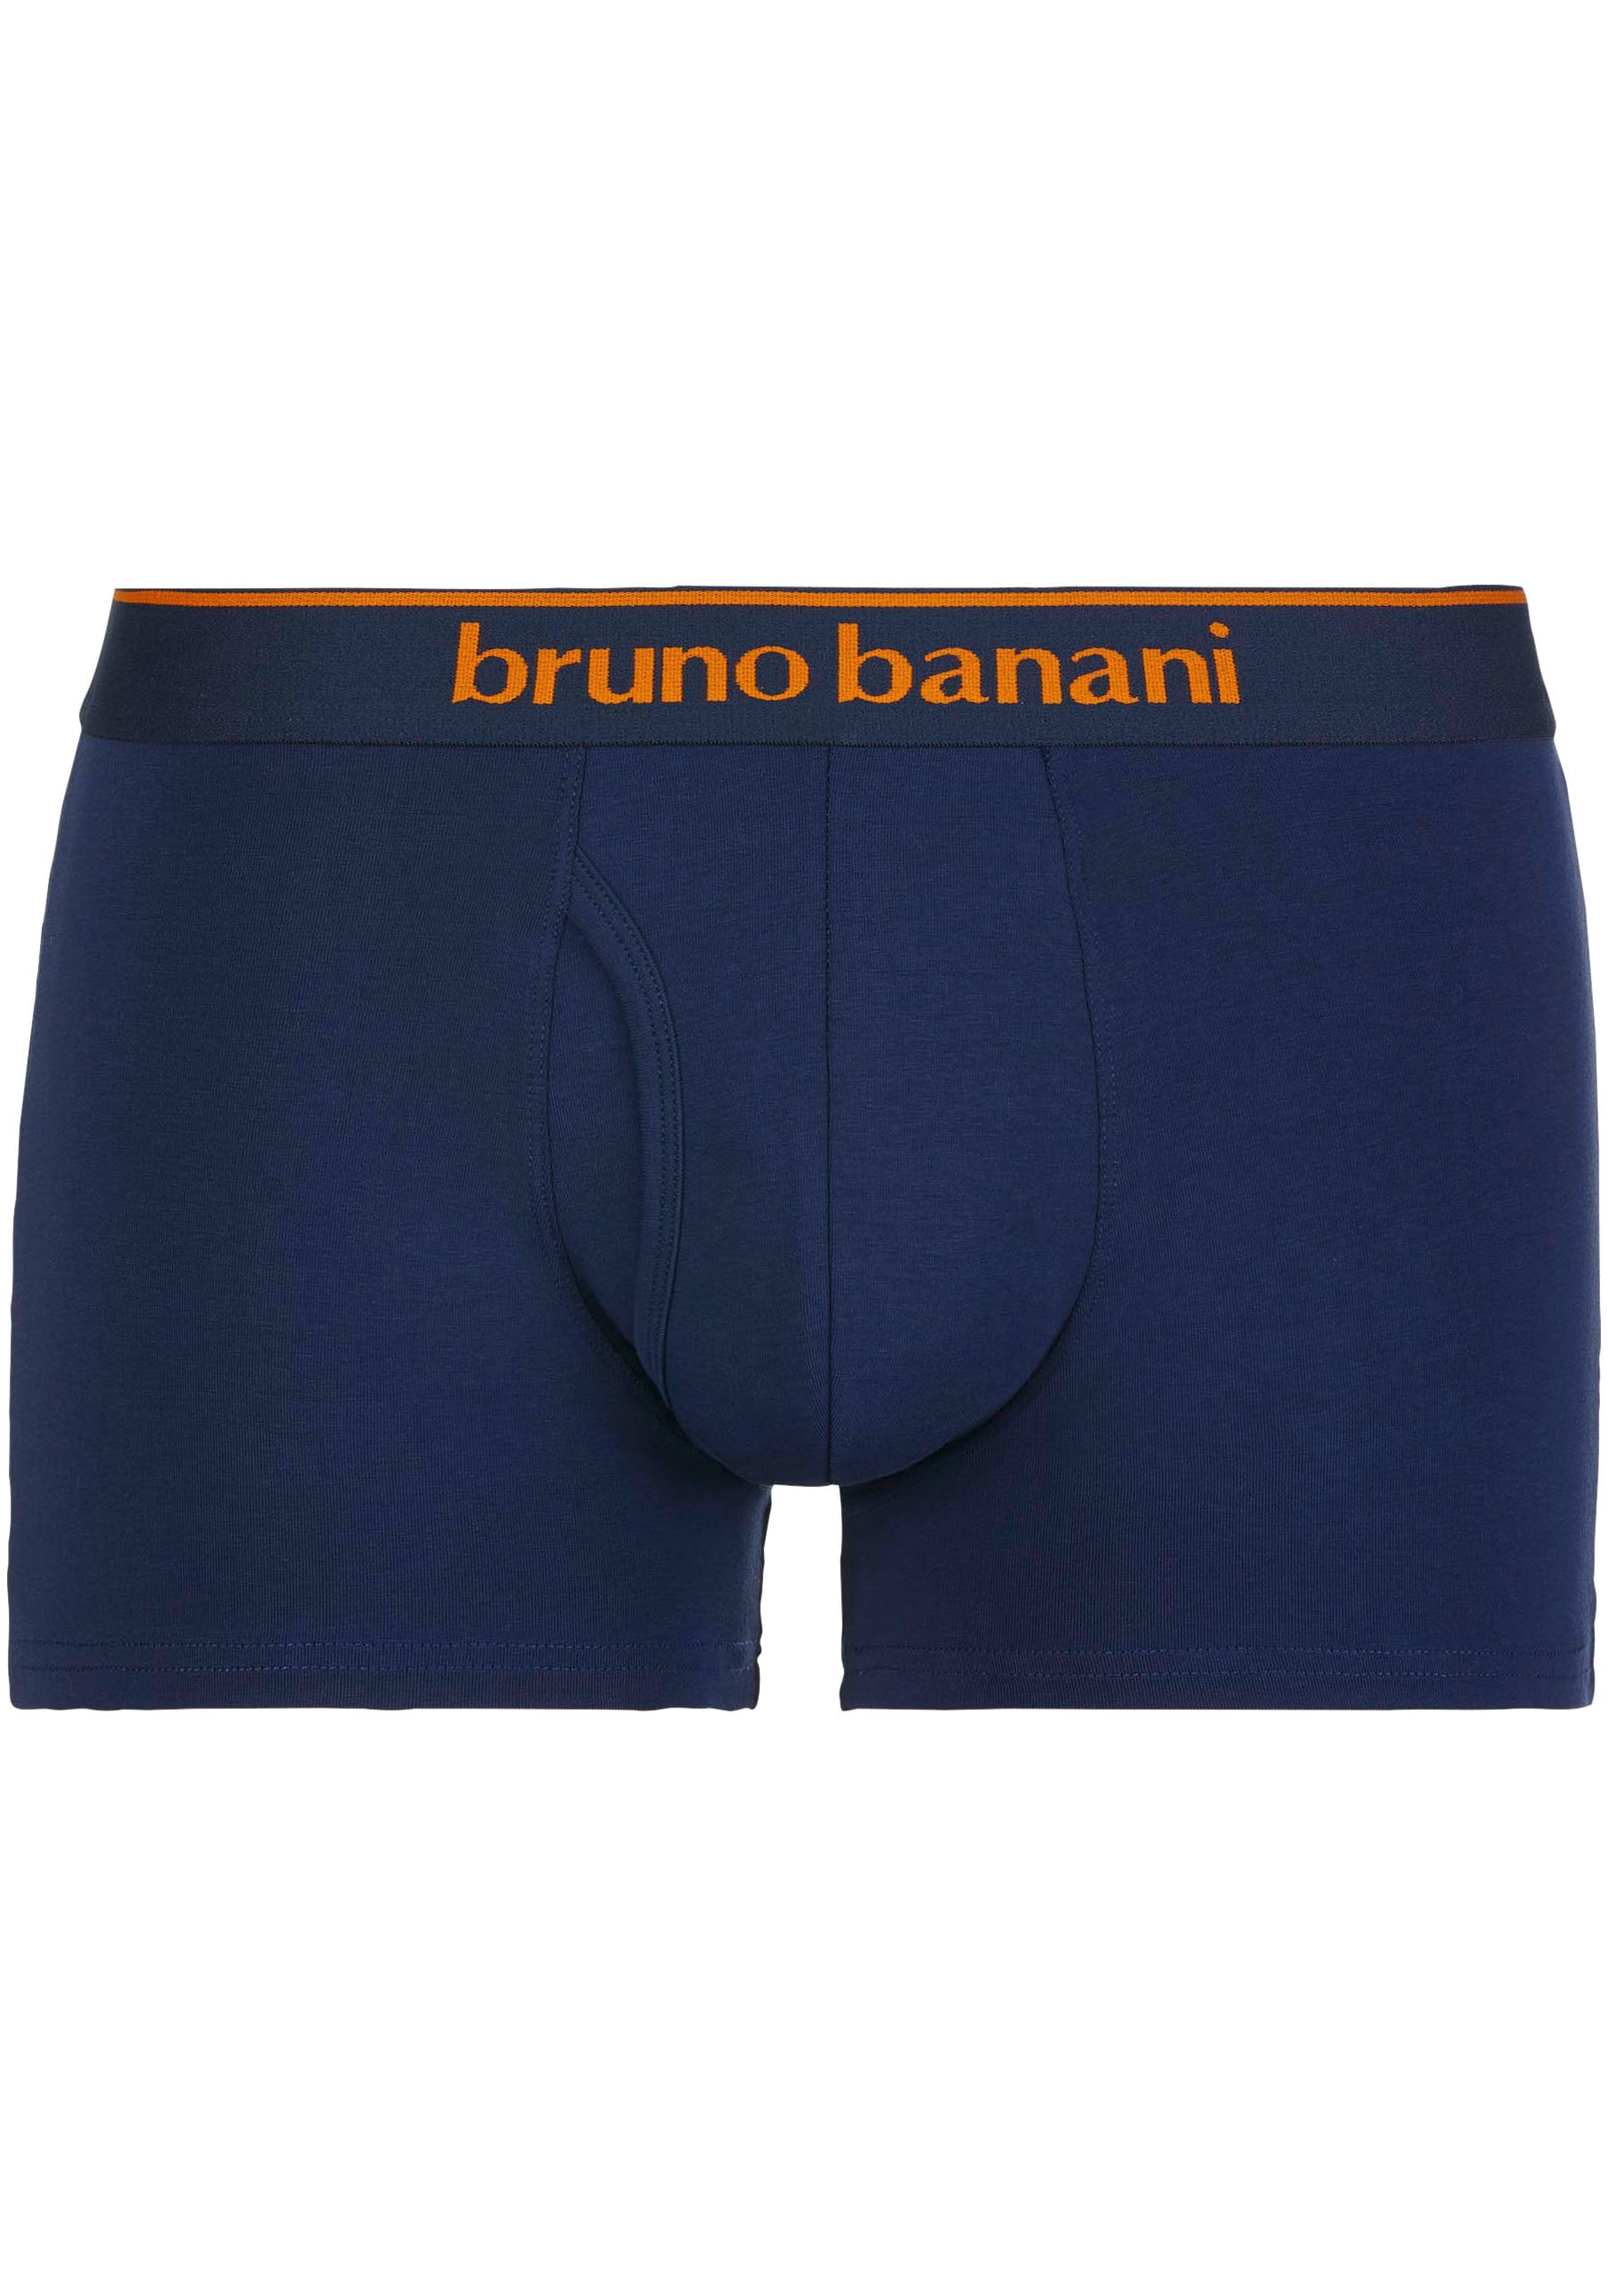 Bruno Banani Boxershorts »Short 2Pack Quick Access«, (Packung, 2 St.), Kontrastfarbene  Details online kaufen bei OTTO